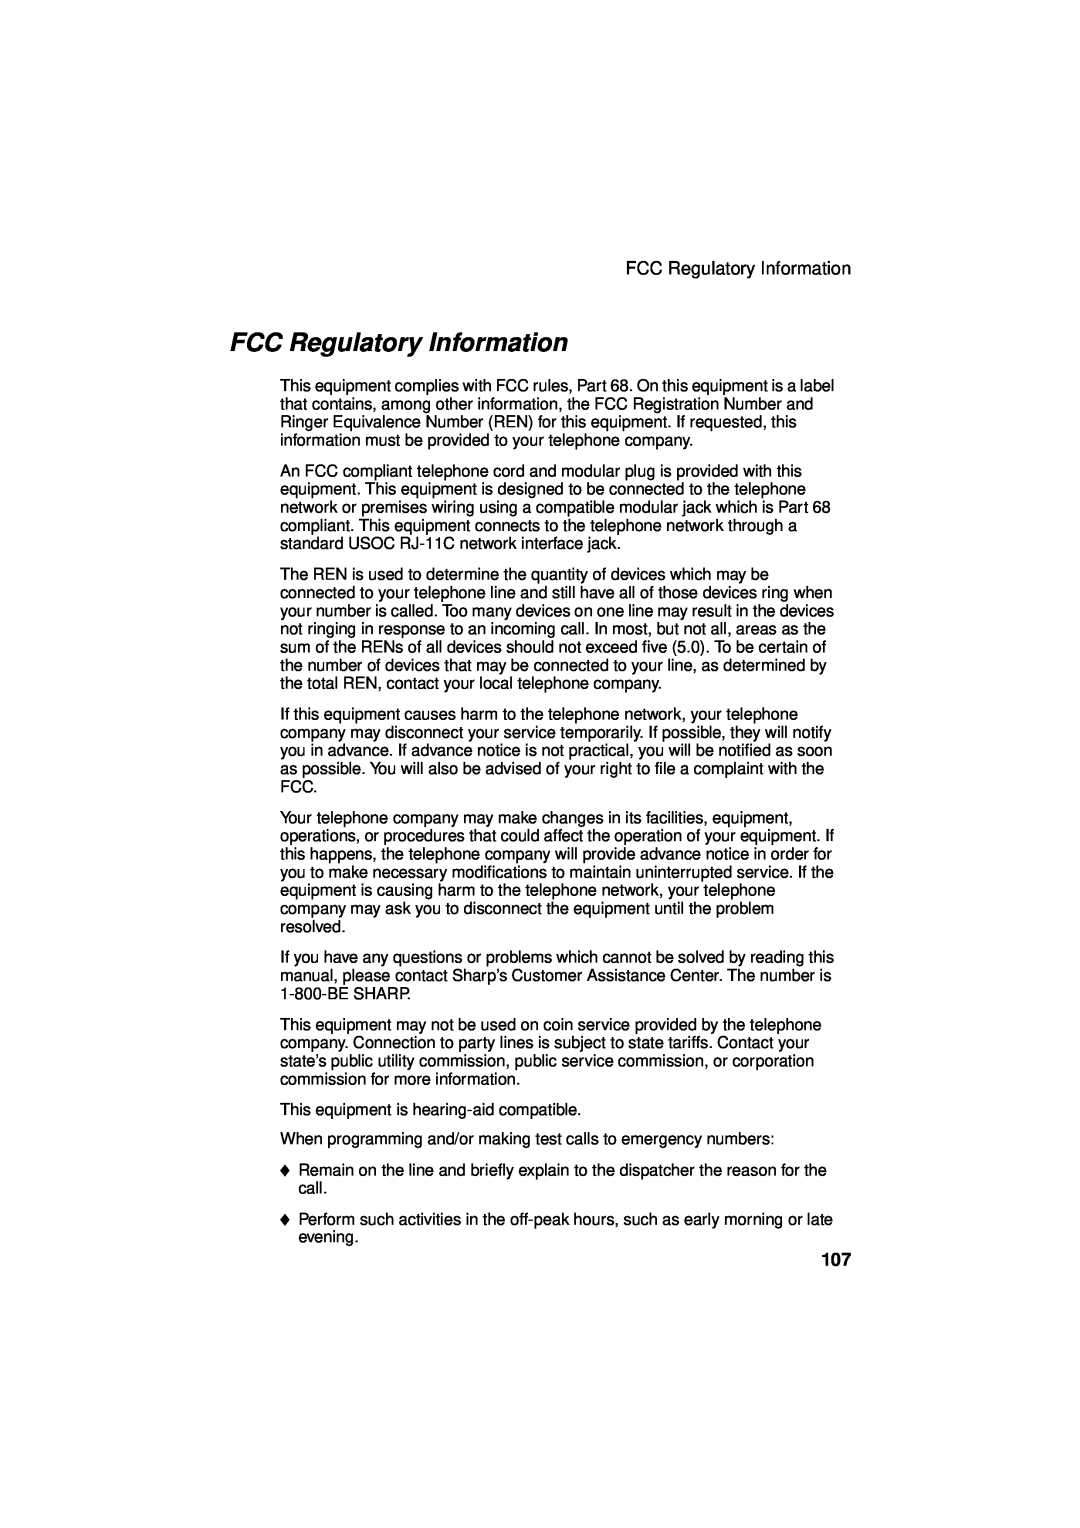 Sharp UX-340LM manual FCC Regulatory Information 